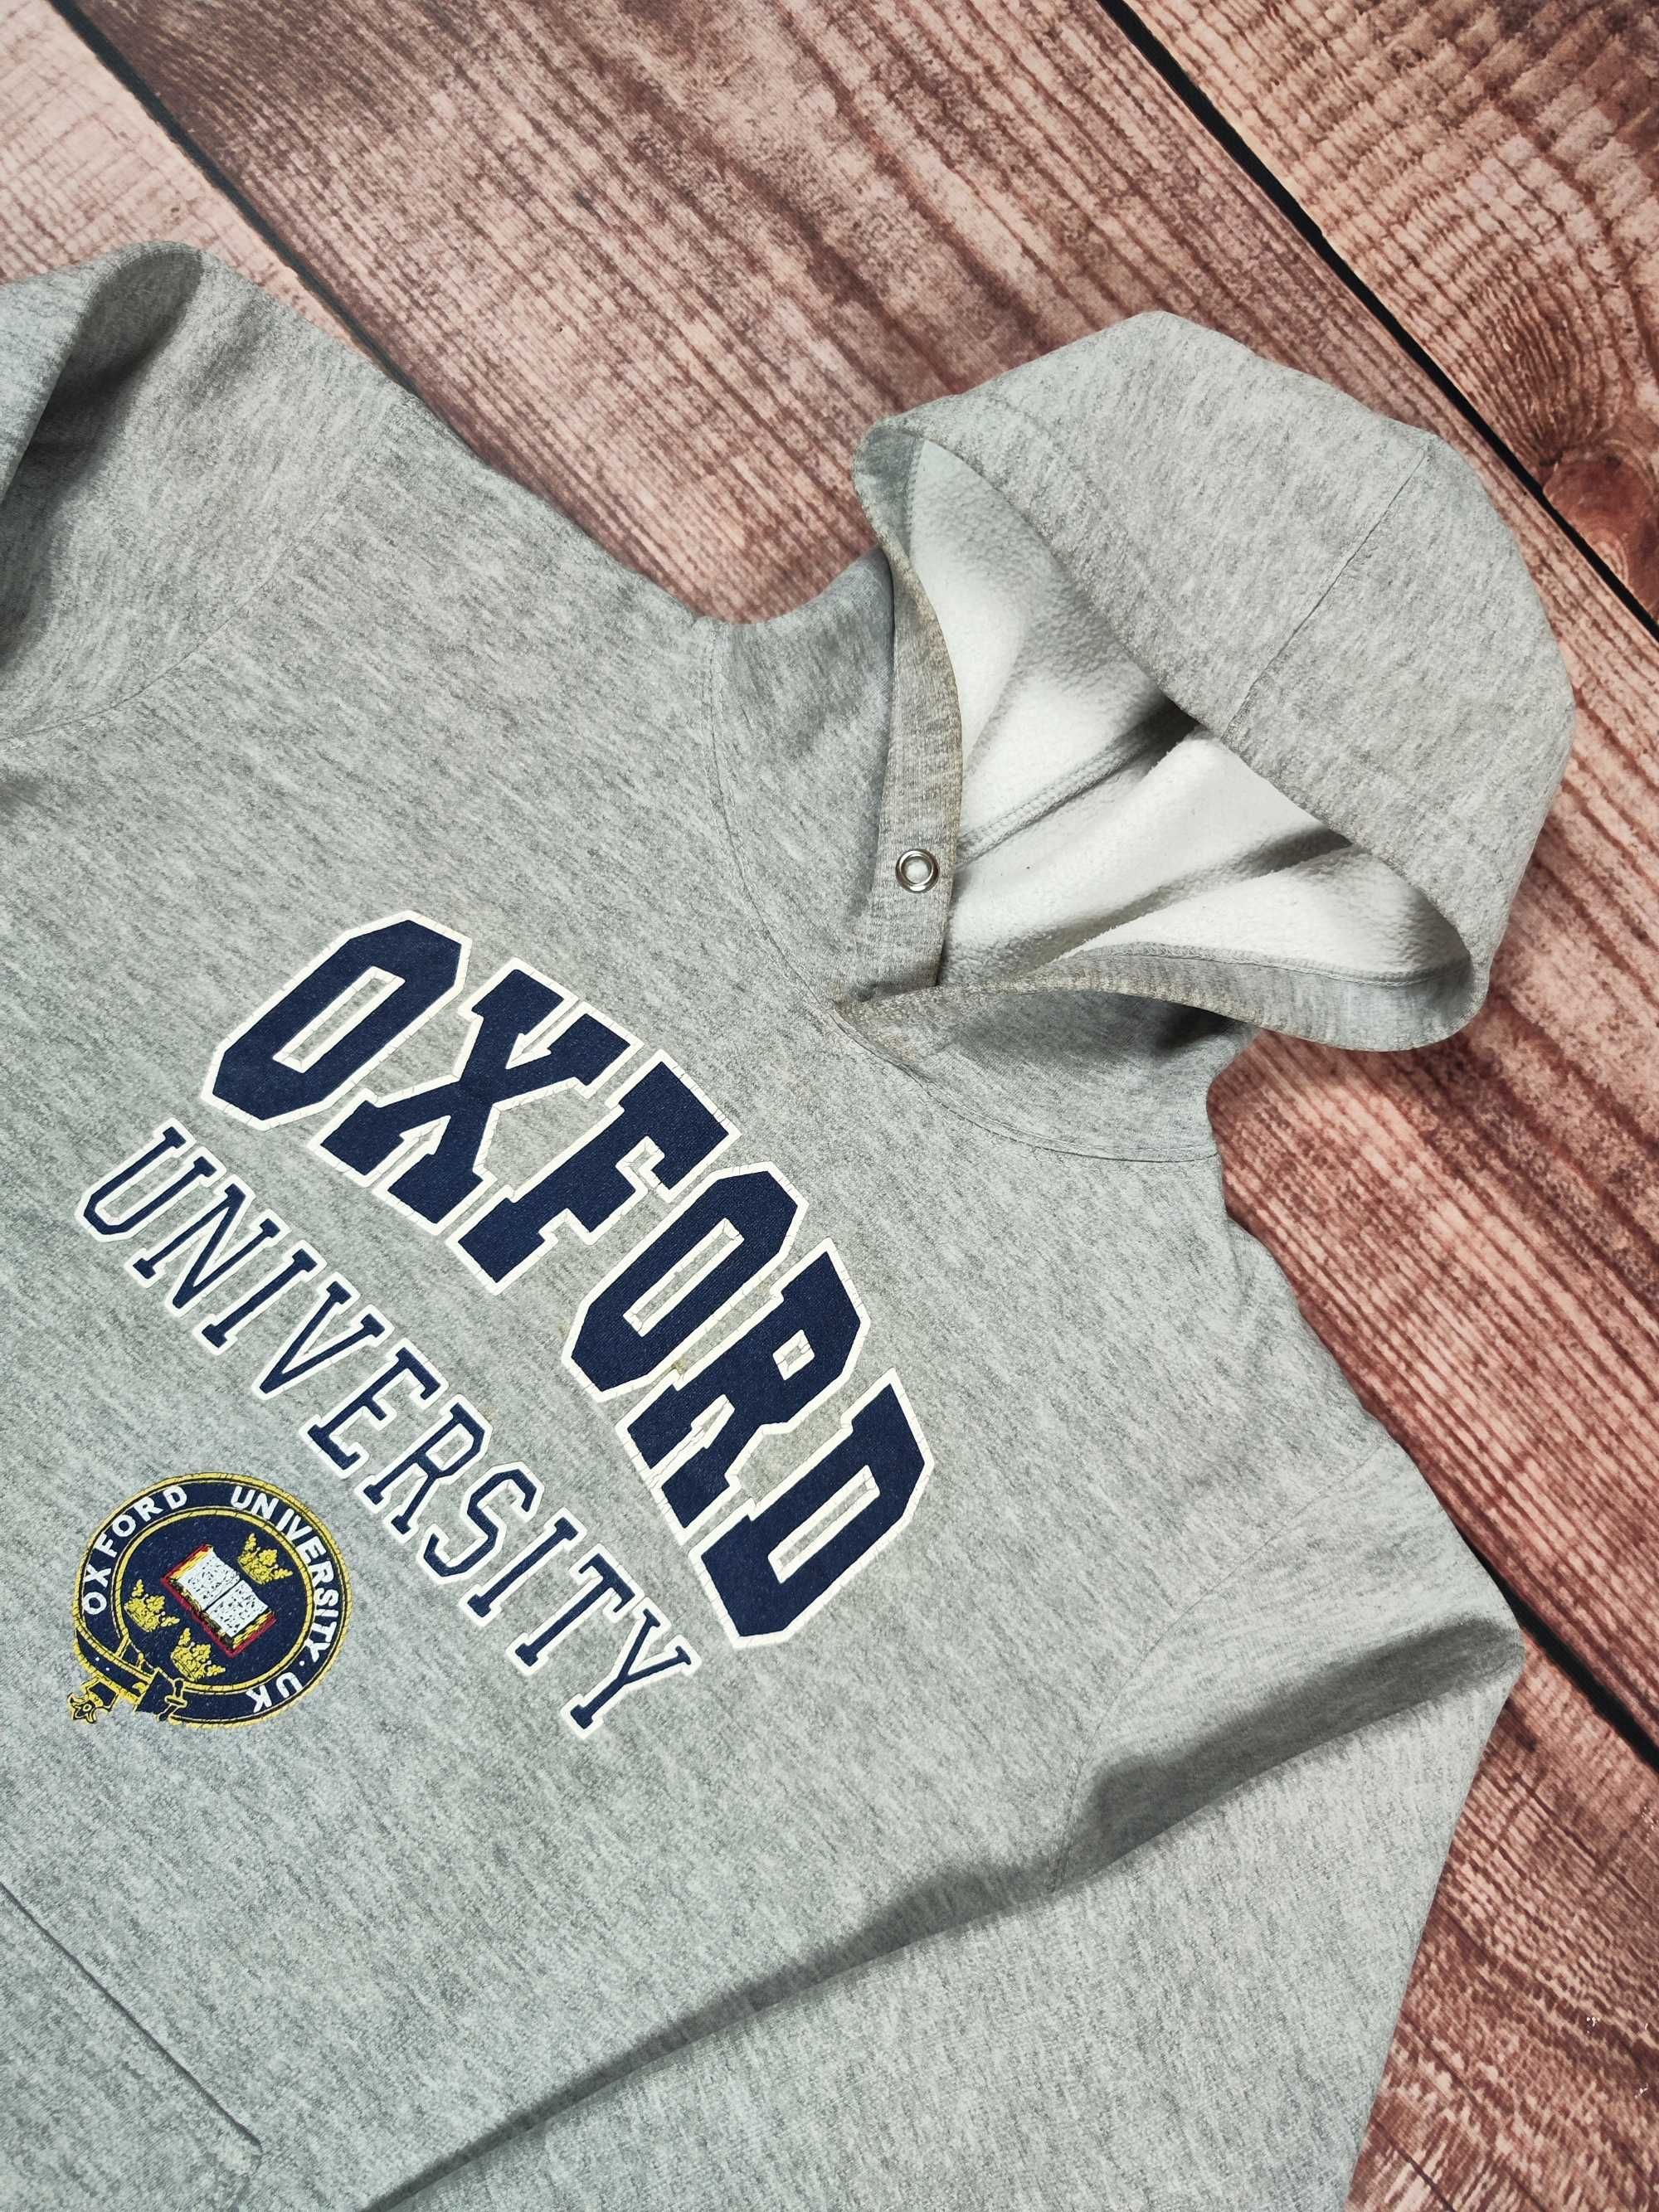 Vintage bluza Oxford University retro hoodie 90s college r. S